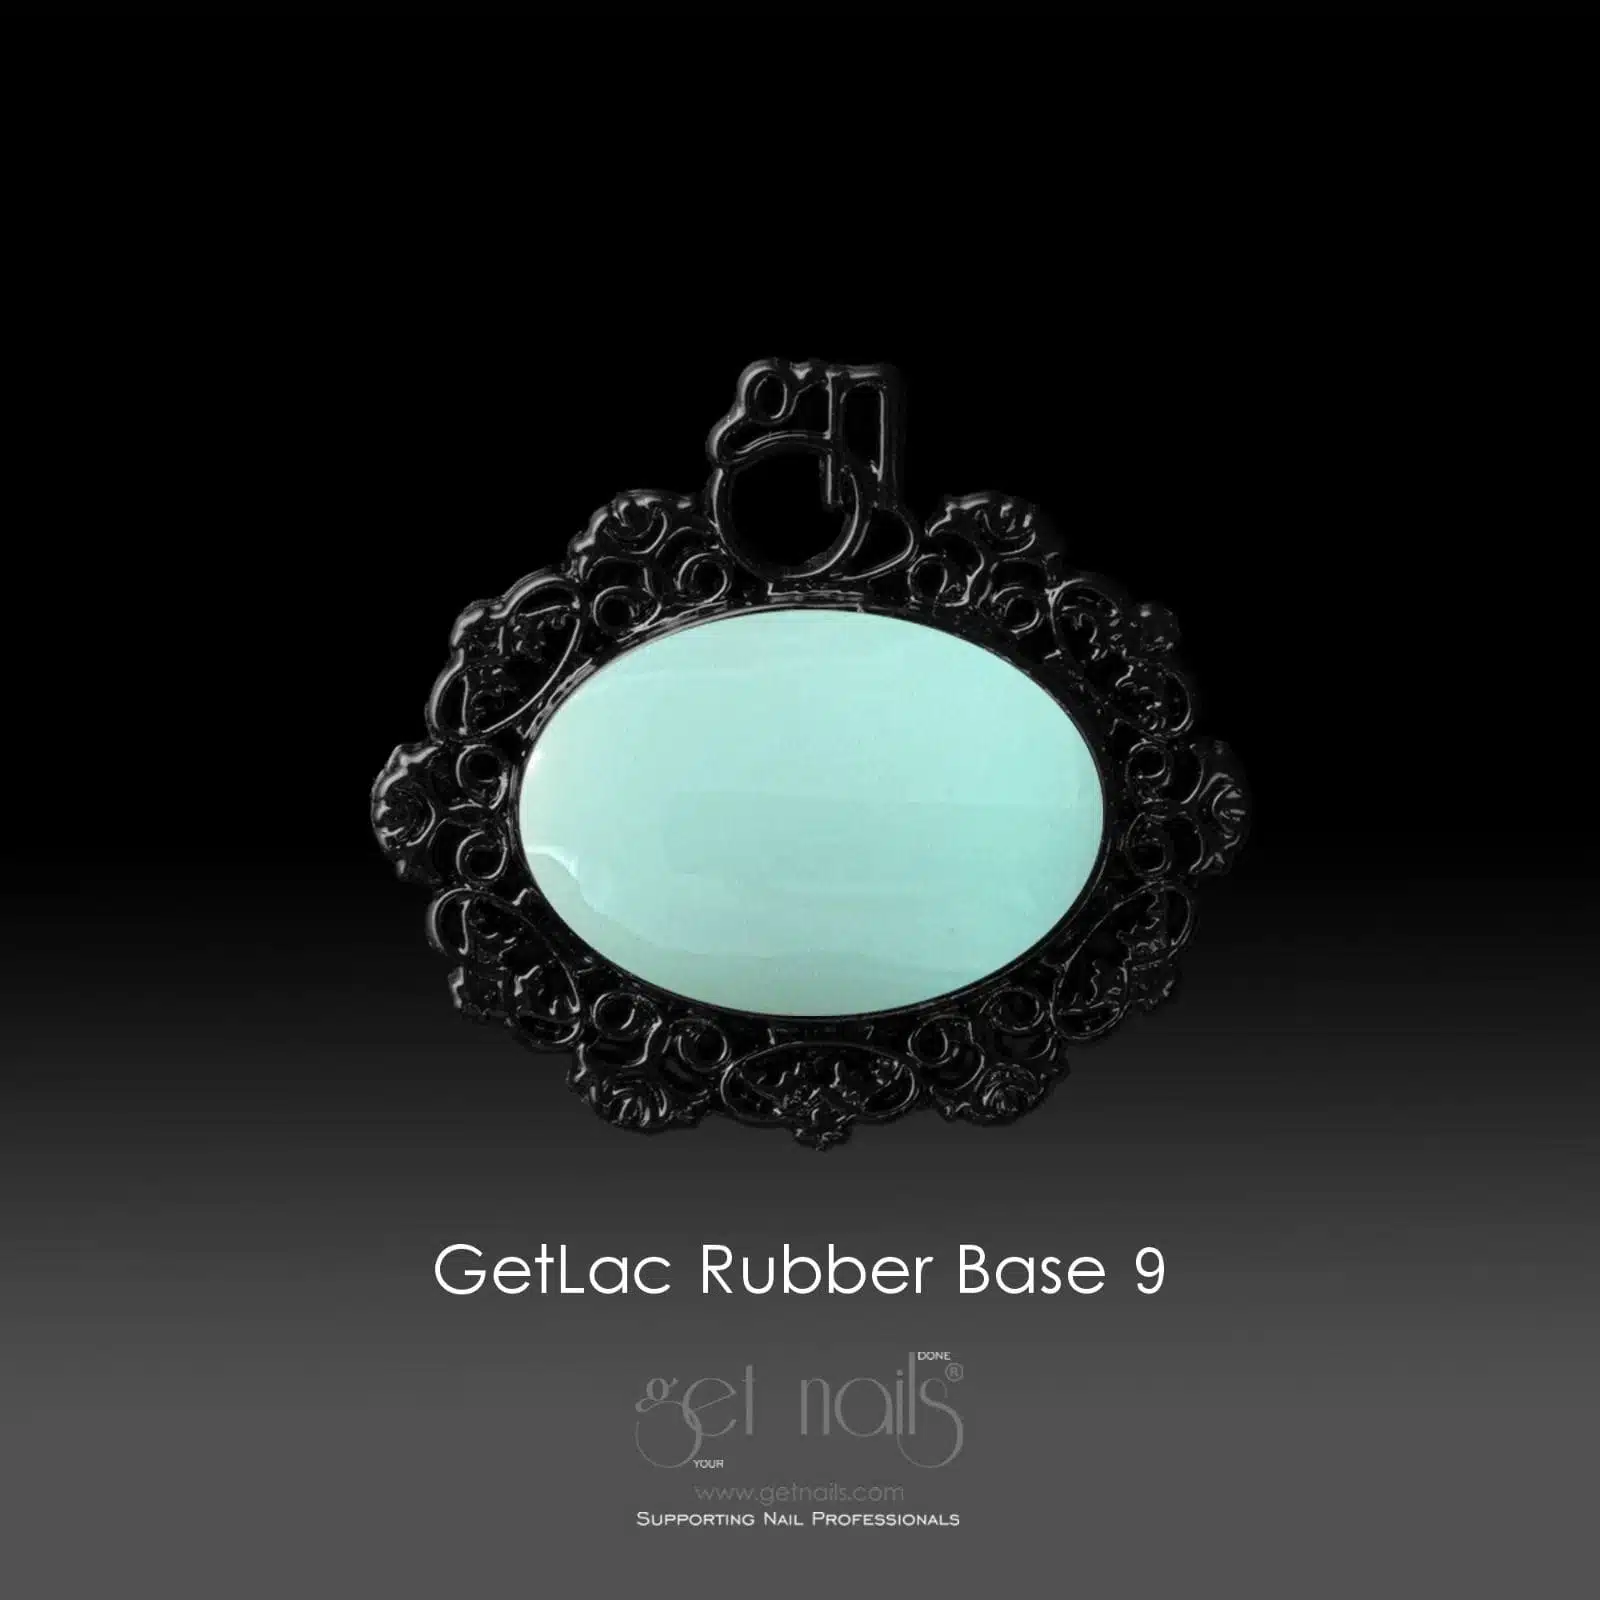 Get Nails Austria - GetLac Rubber Base 9 15g